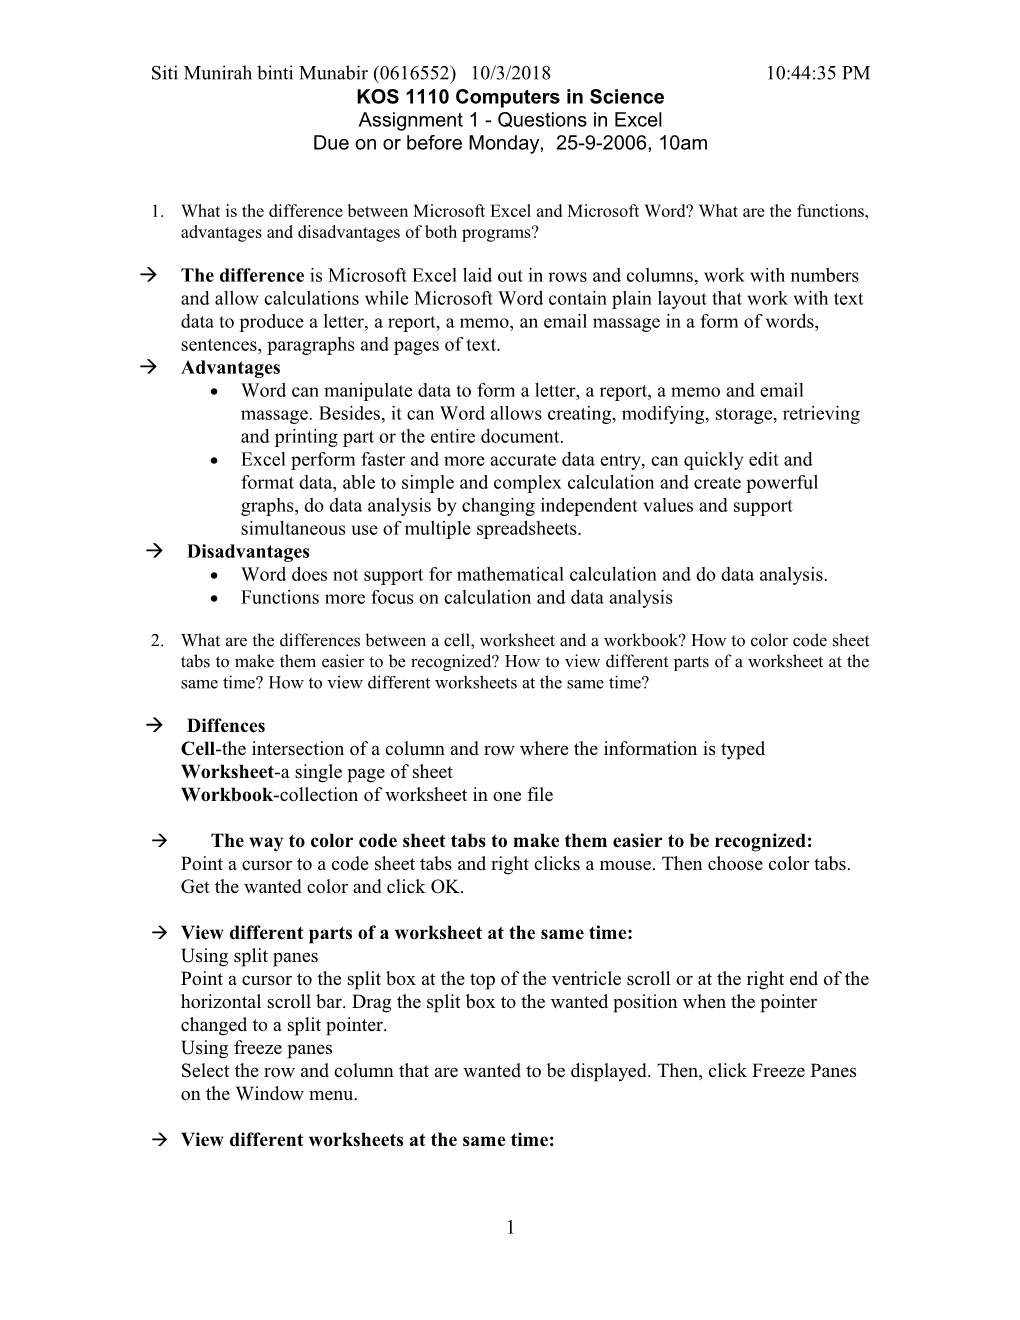 MS Excel Questions Set II